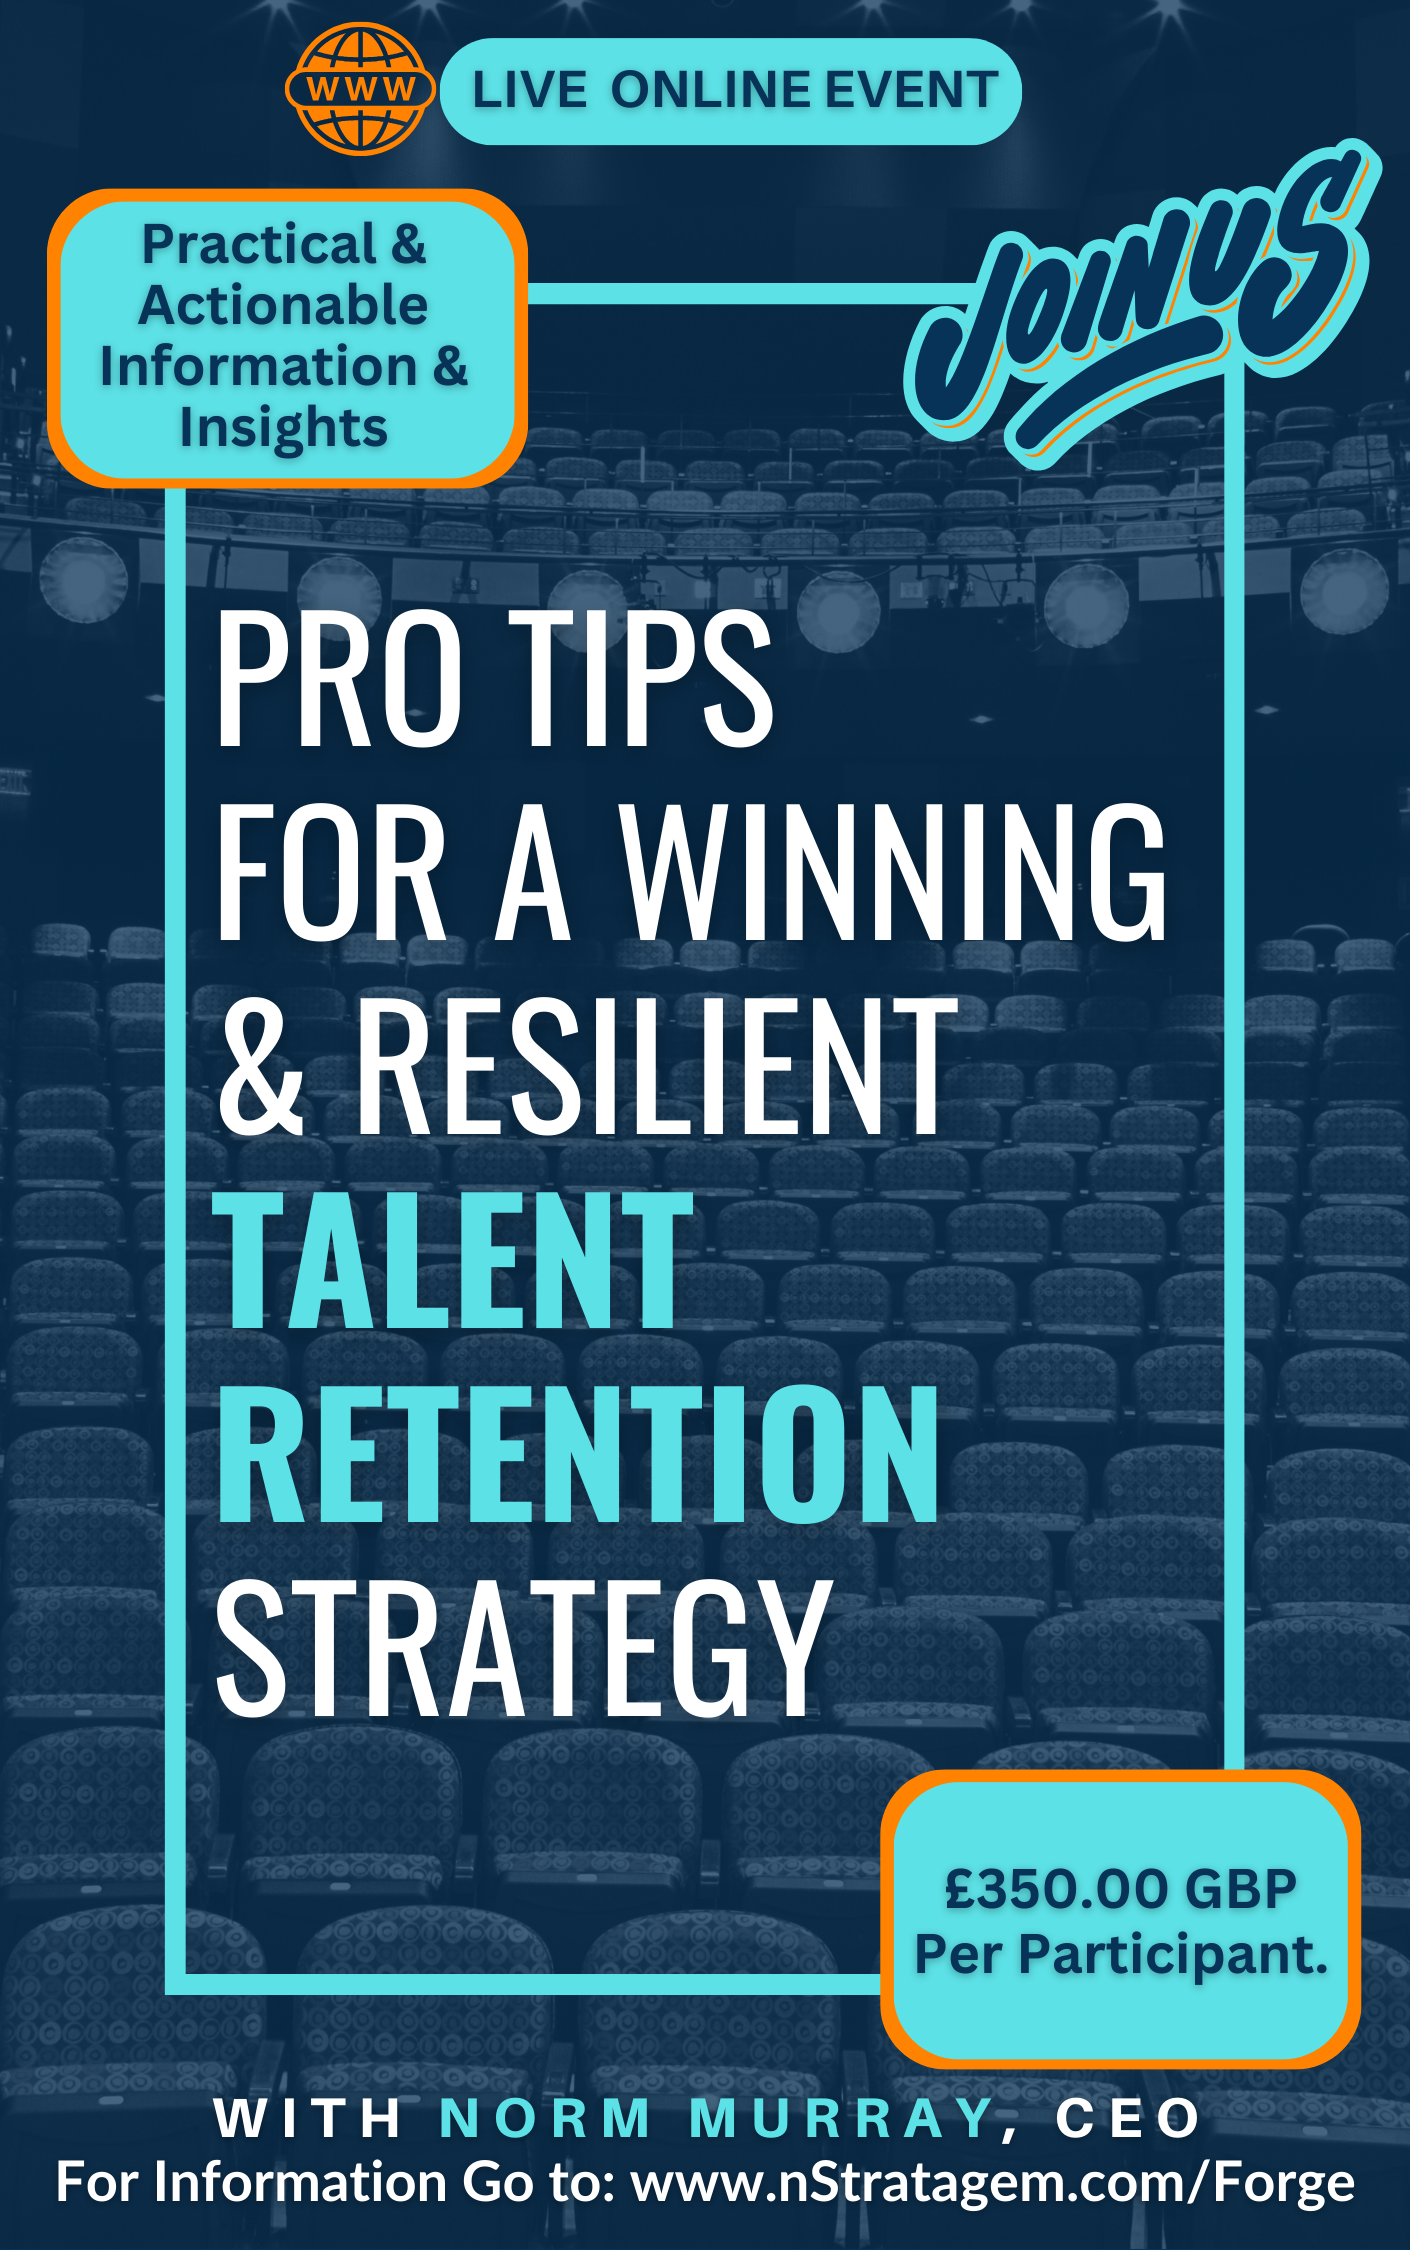 Talent Retention Strategy Workshop